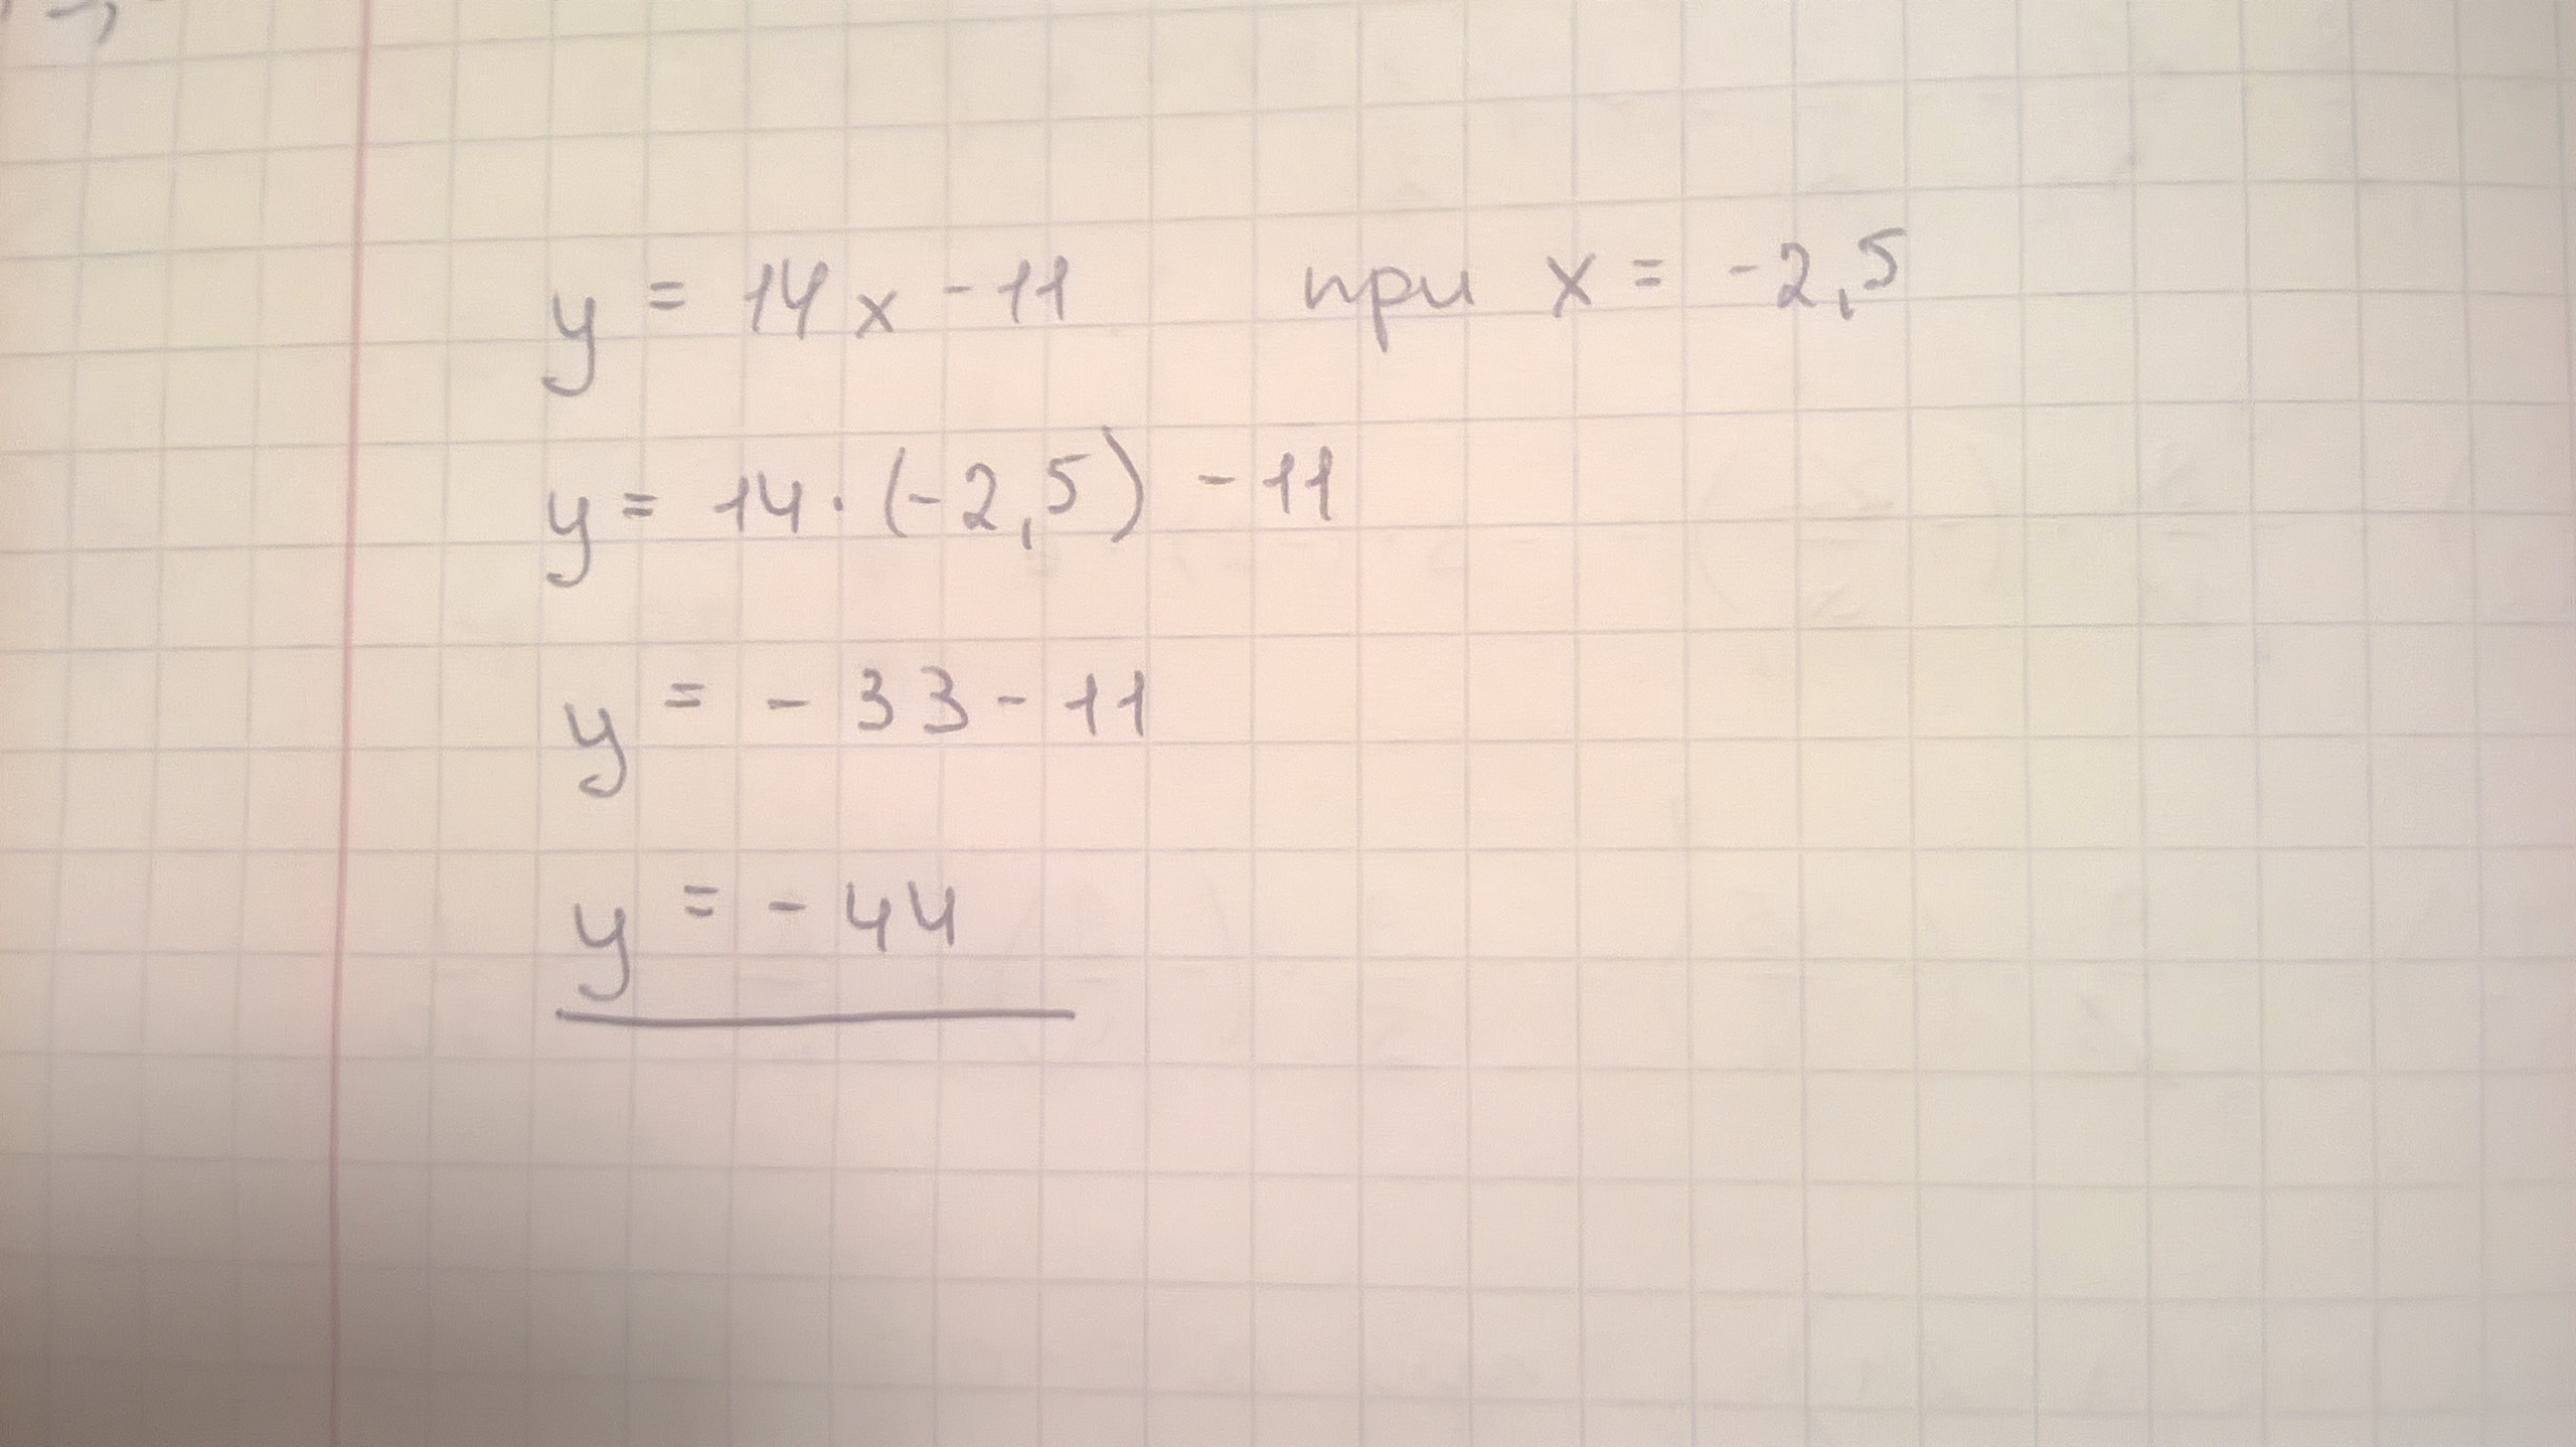 Функция заданной формулы y 4x 5. Функция заданной формулой y 4x-30. Функция задана формулой y=-2.5. Функция задана формулой y 2x-15. Функция задана формулой y 4x-30.